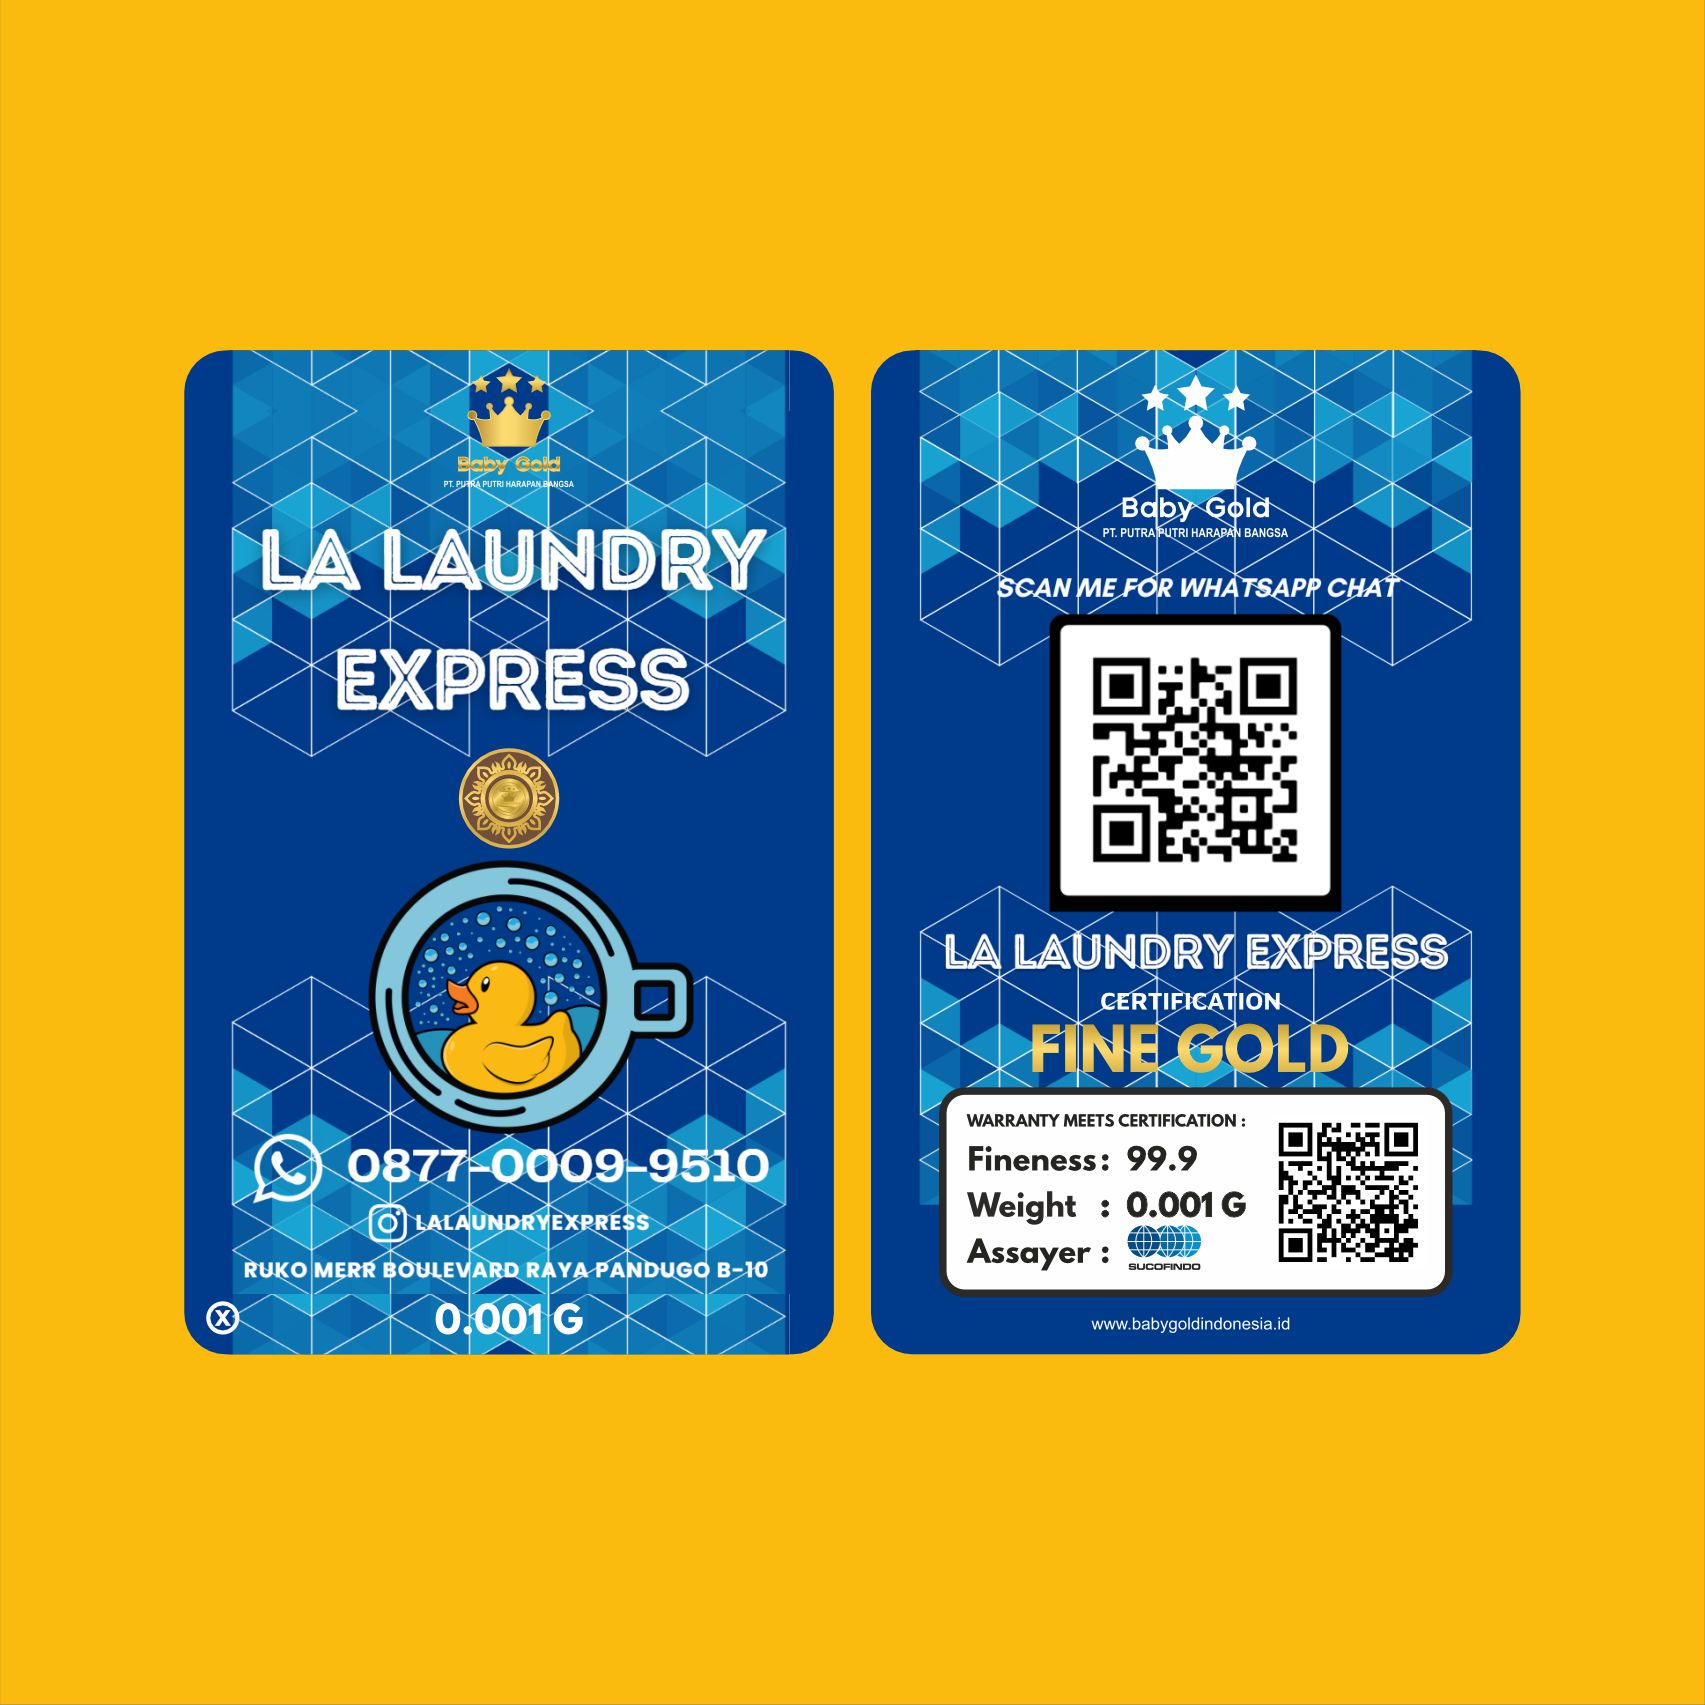 La Laundry Express 0,001